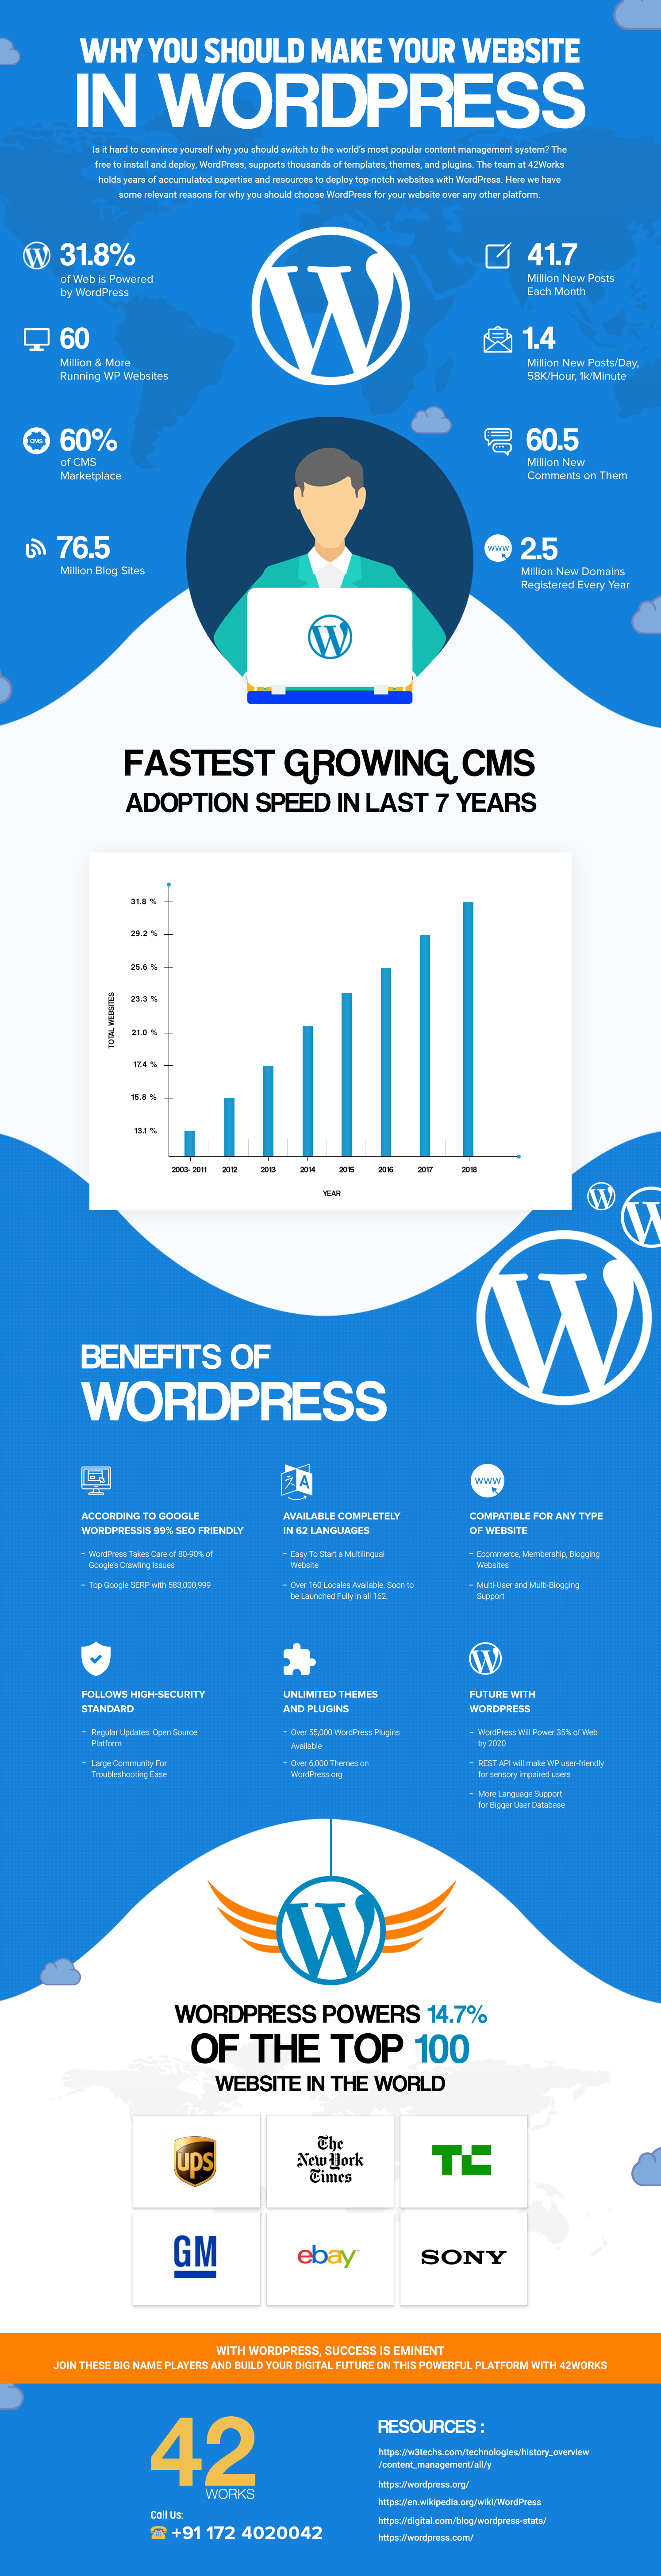 WordPress for Business Website